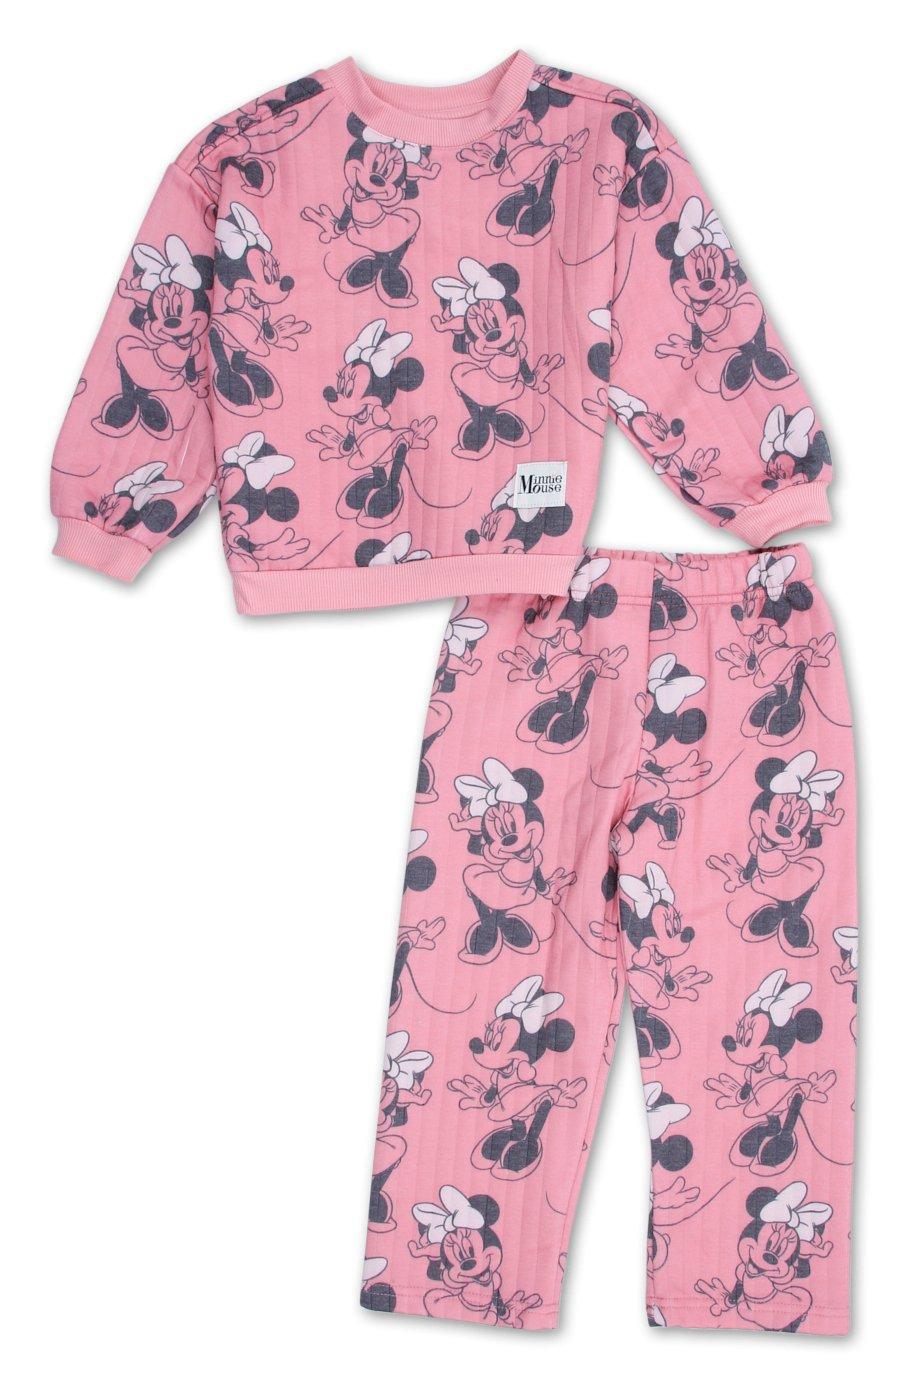 Little Girls 2 Pk Minnie Mouse Pants Set